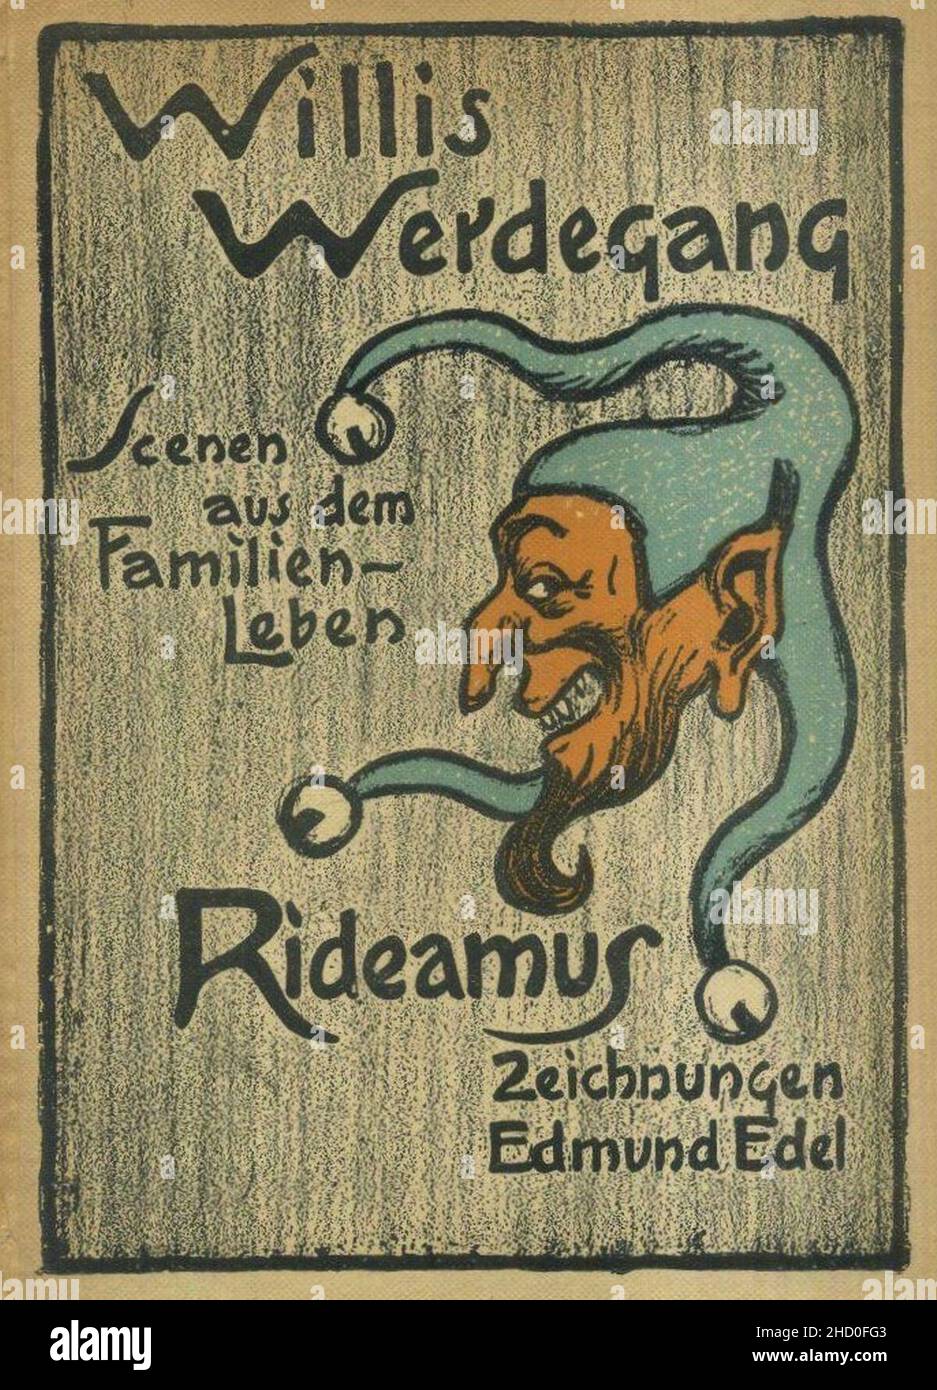 Rideamus - Willis Werdegang. Szenen aus dem Familienleben - Edmund Edel. Stock Photo